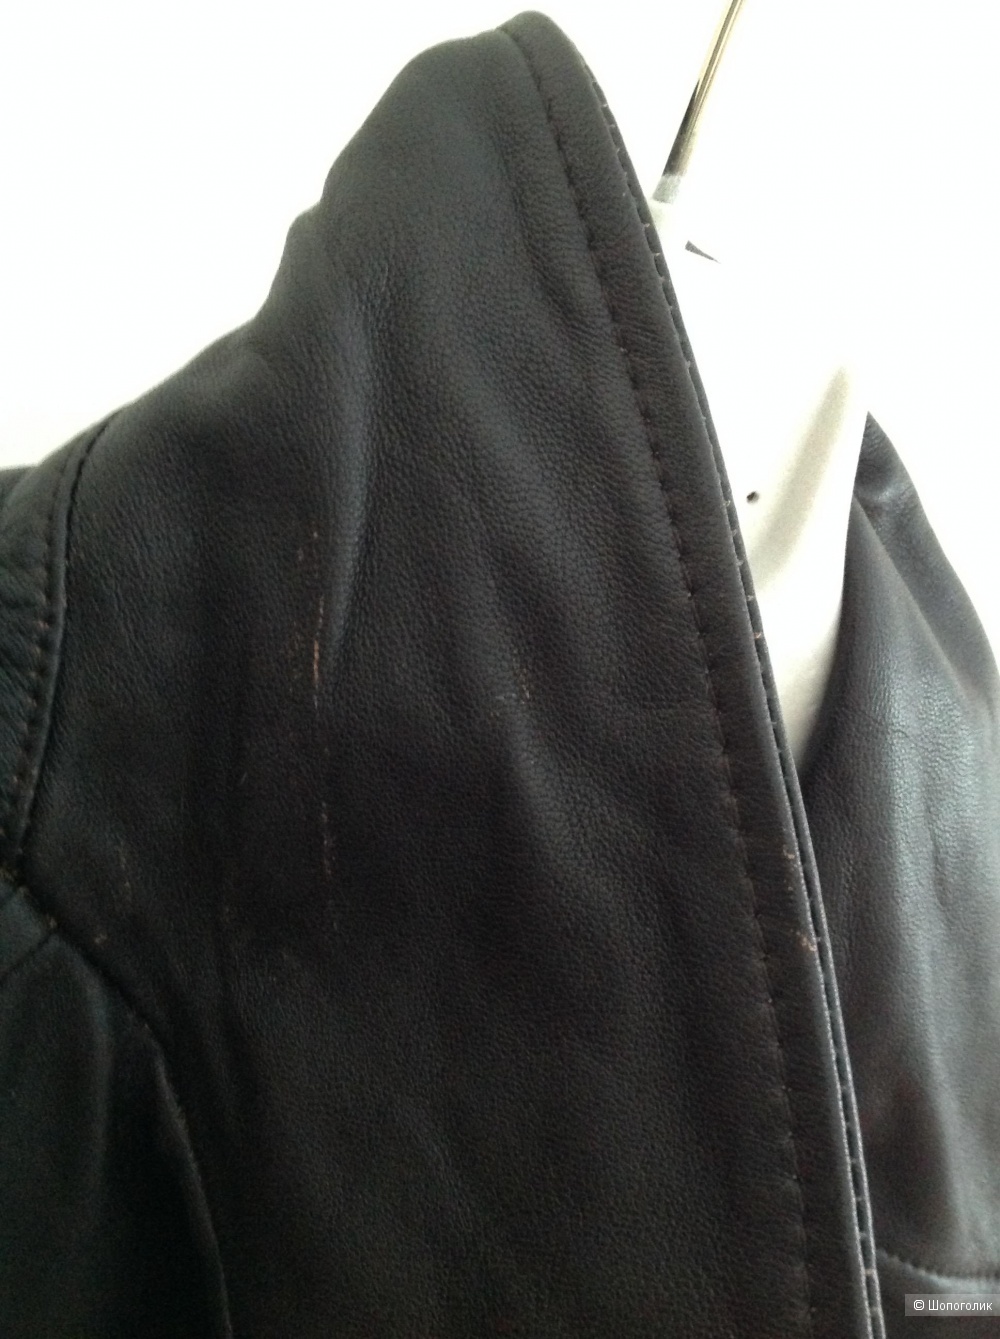 Кожаная куртка косуха Каляев, размер М, на 40-42-44